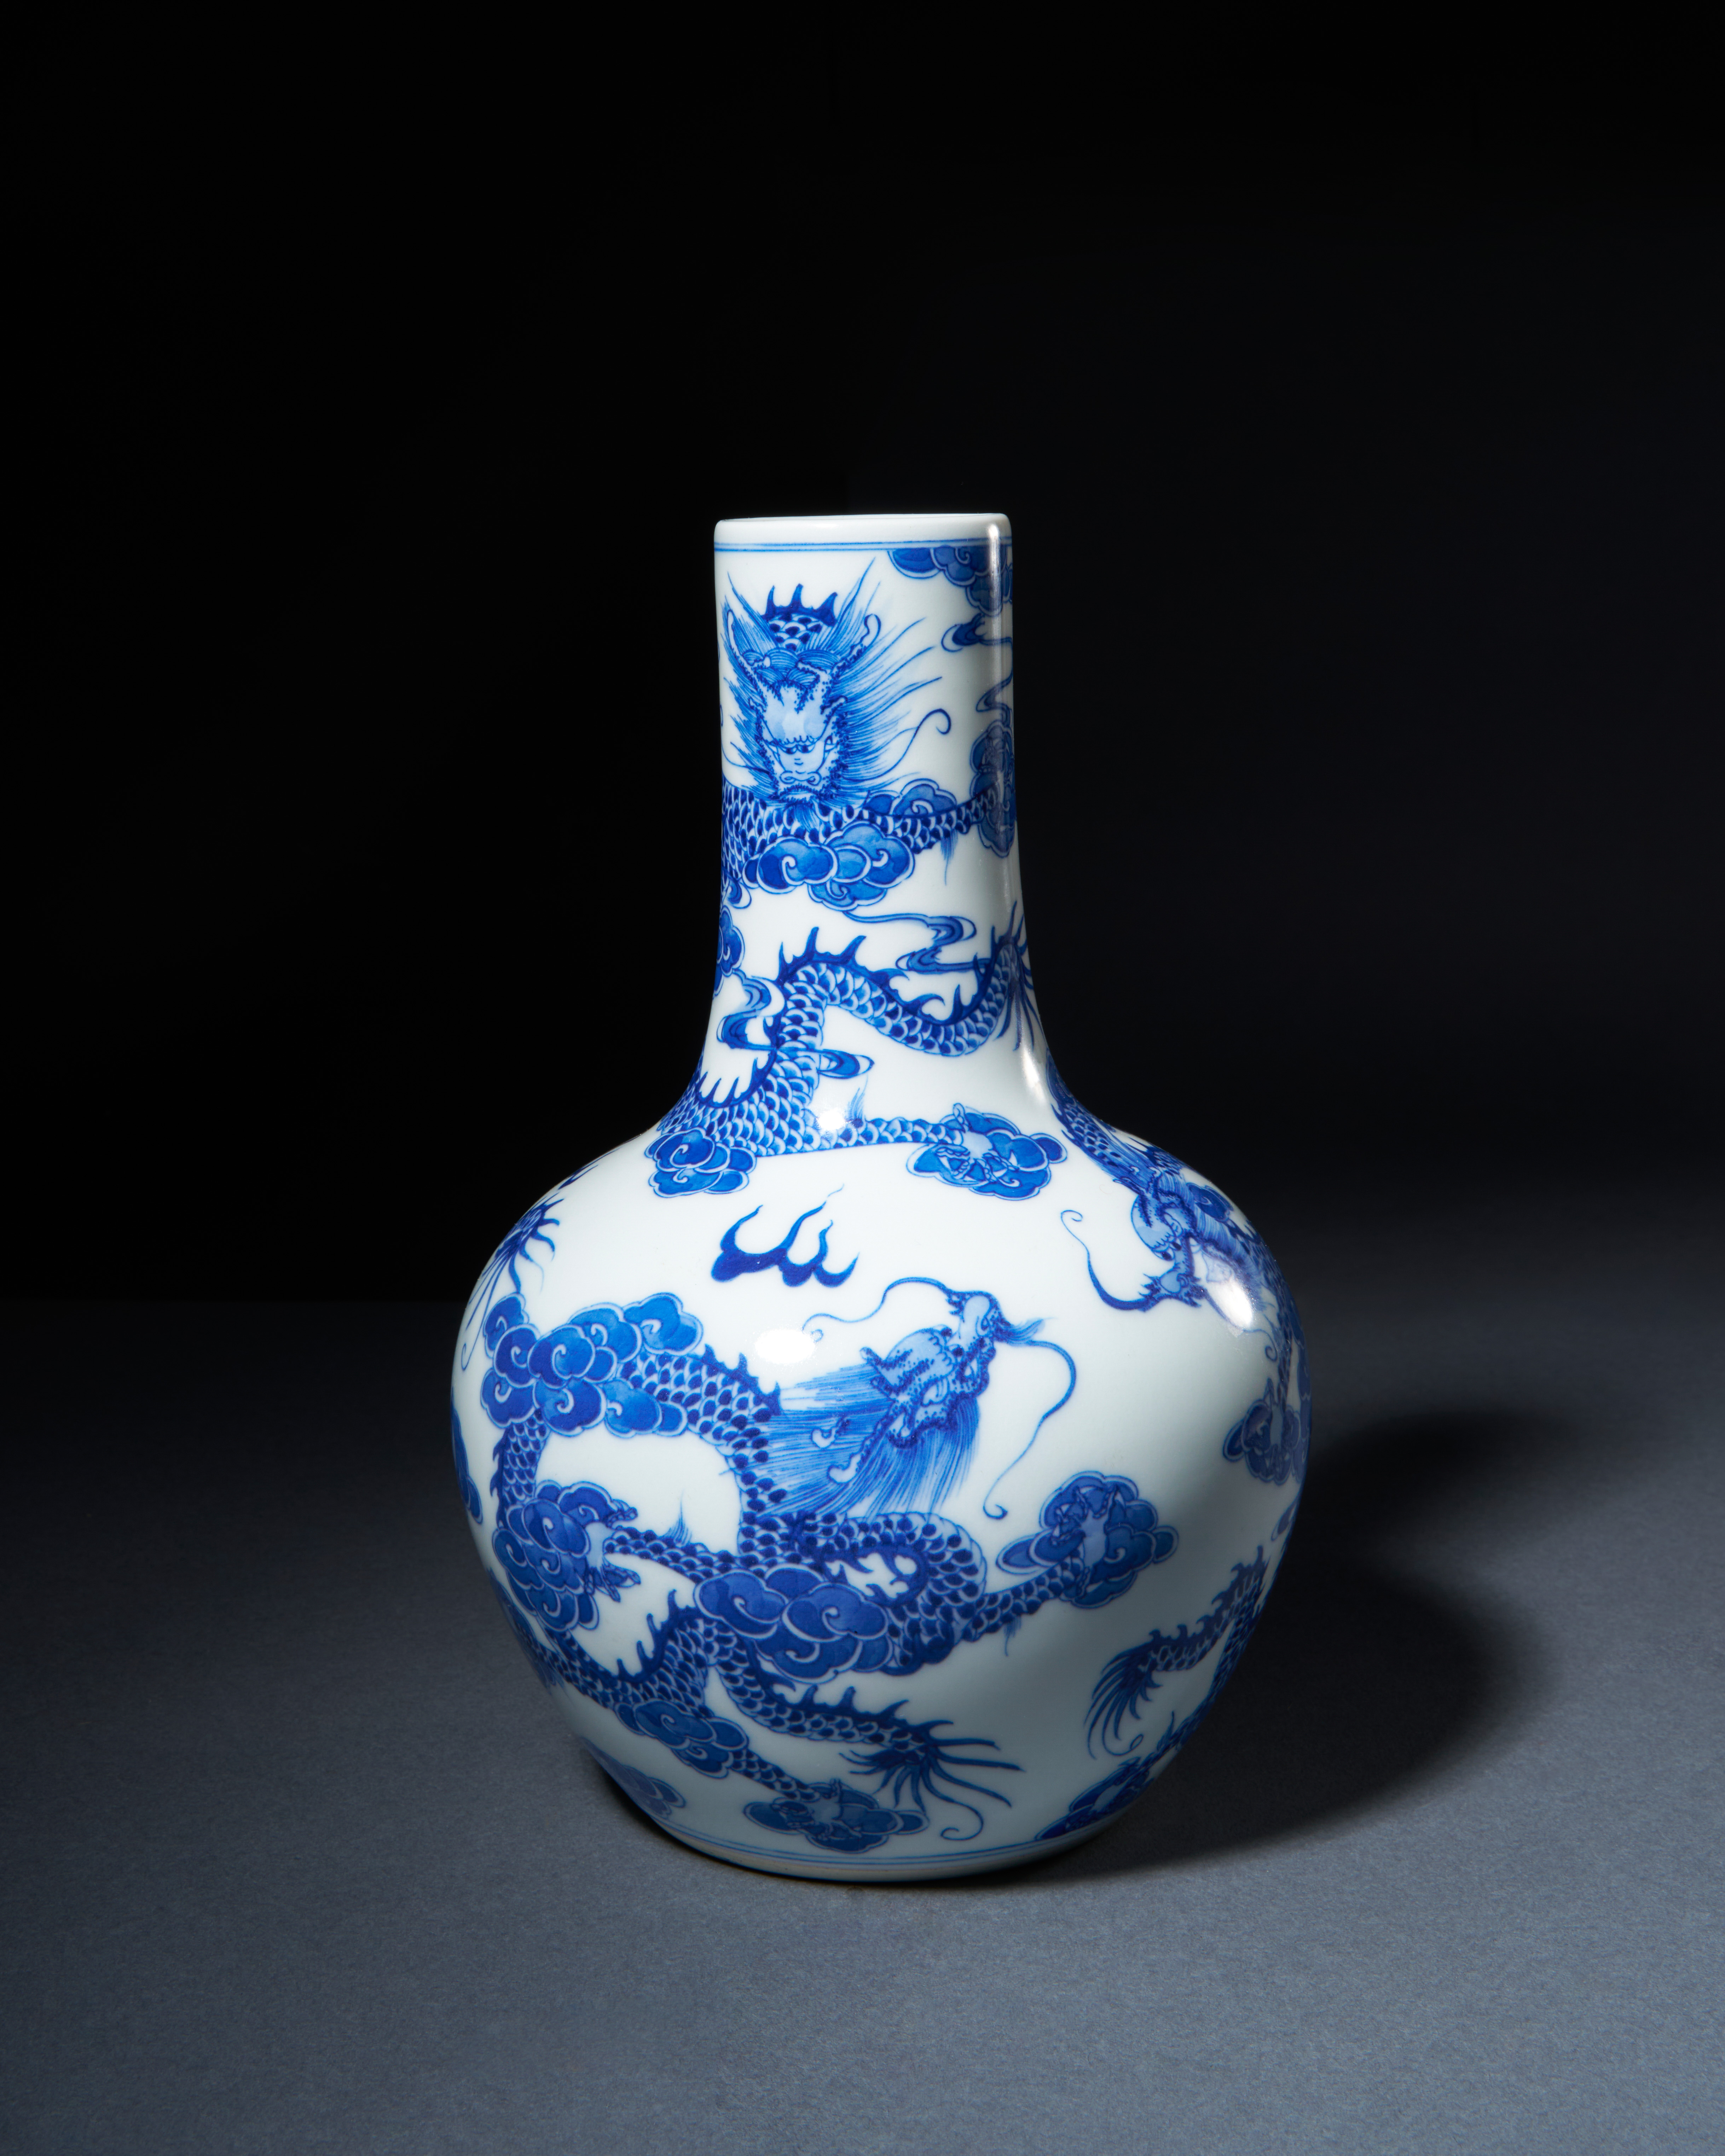 A CHINESE BLUE & WHITE BOTTLE VASE, QING DYNASTY (1644-1911) - Image 2 of 6